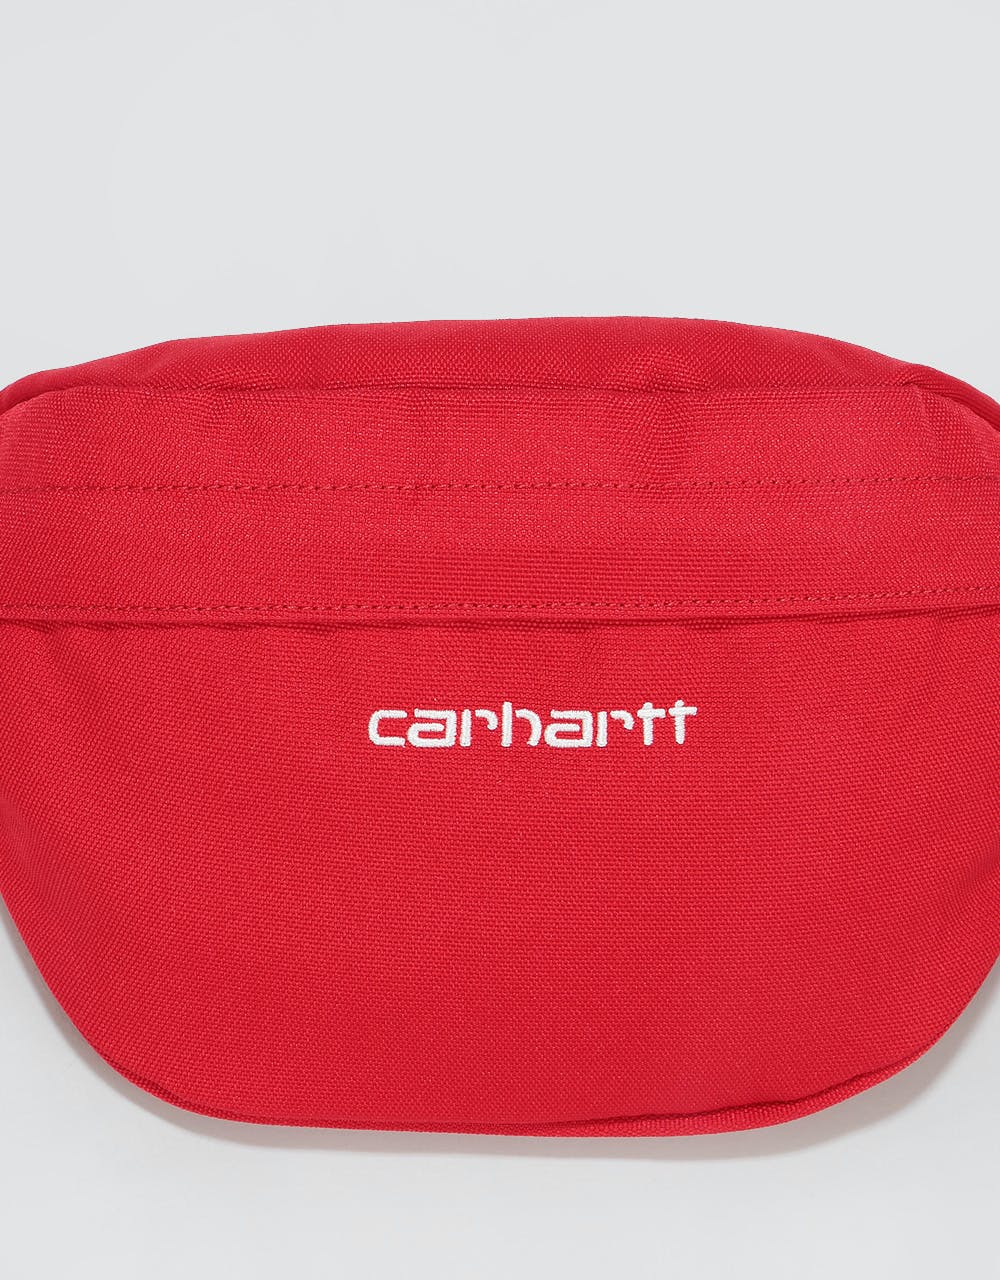 Carhartt WIP Payton Cross Body Bag - Cardinal/White